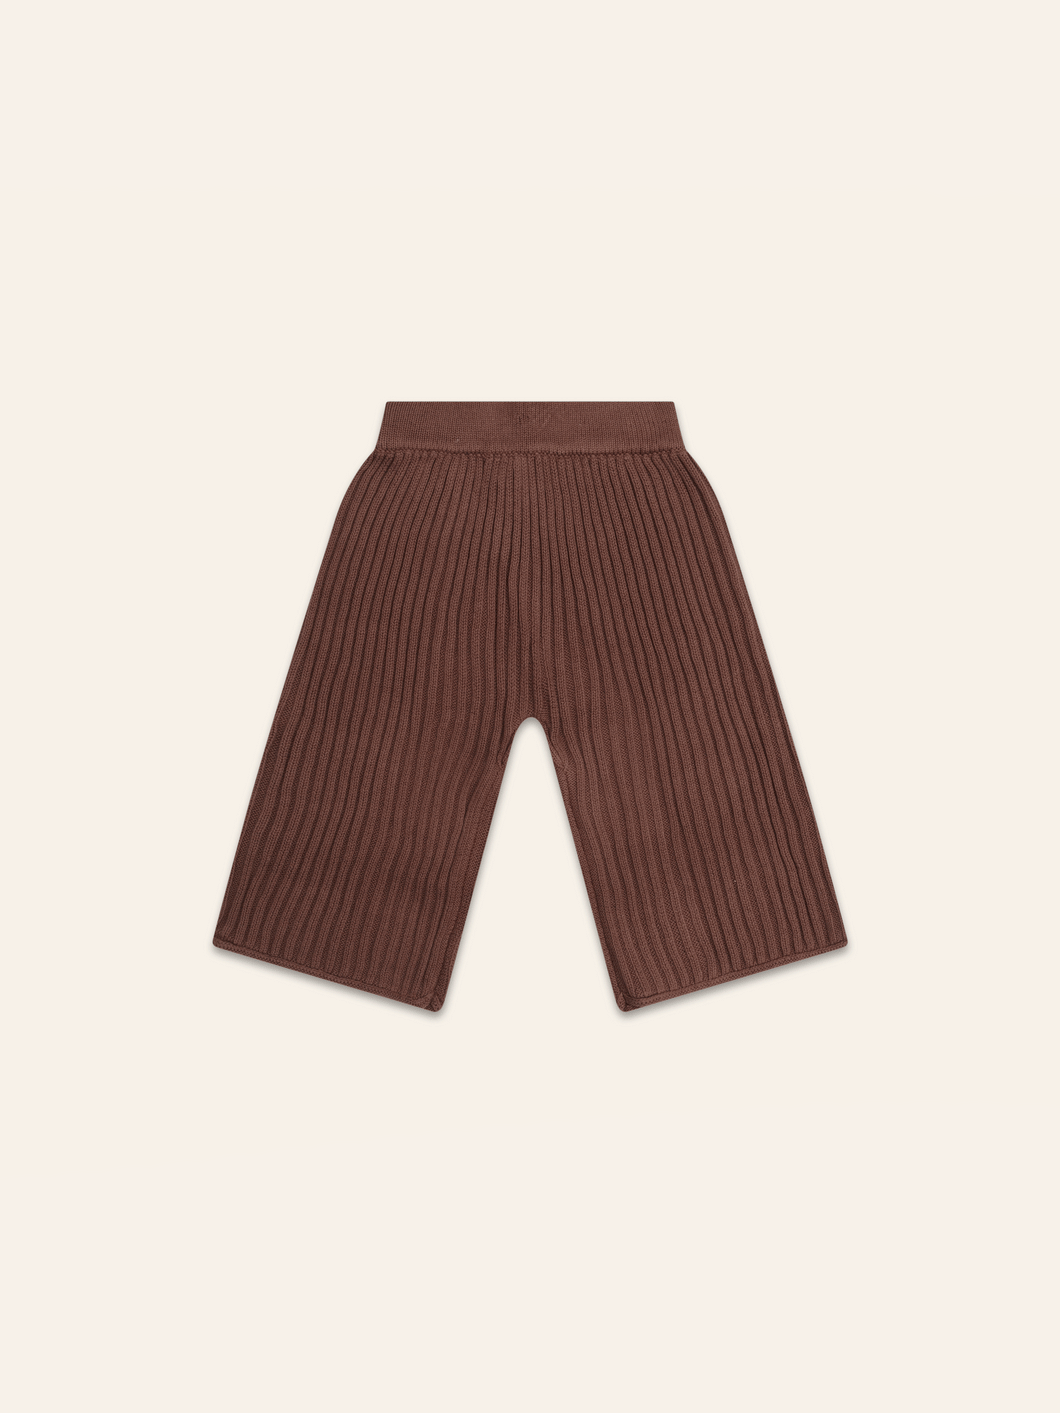 Illoura The Label - Essential Knit Pants - Cocoa